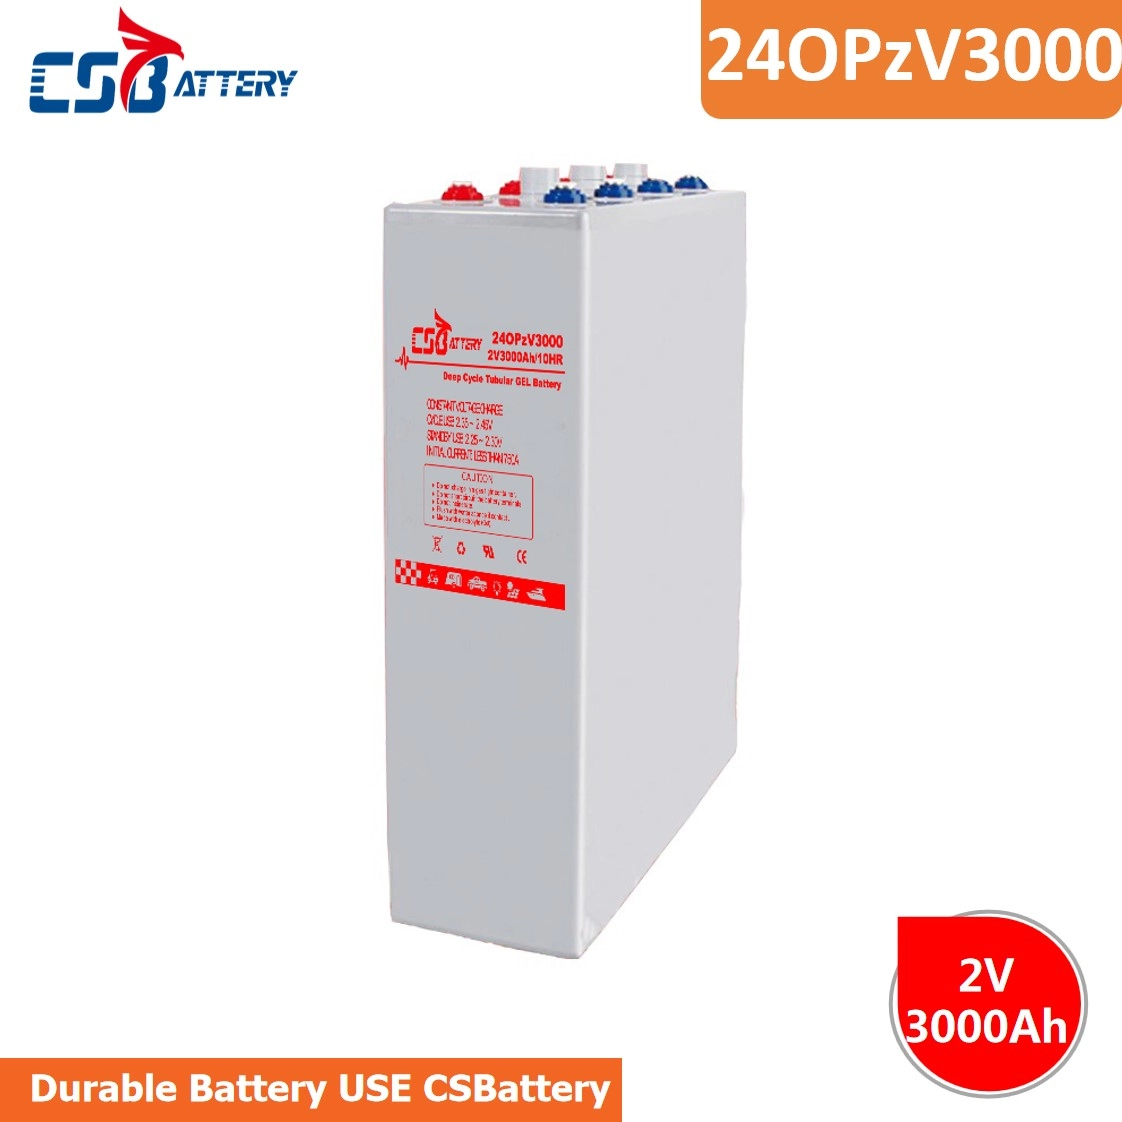 OPzV2-3000 2V 3000Ah Tubular Deep Cycle Gel OPzV Battery